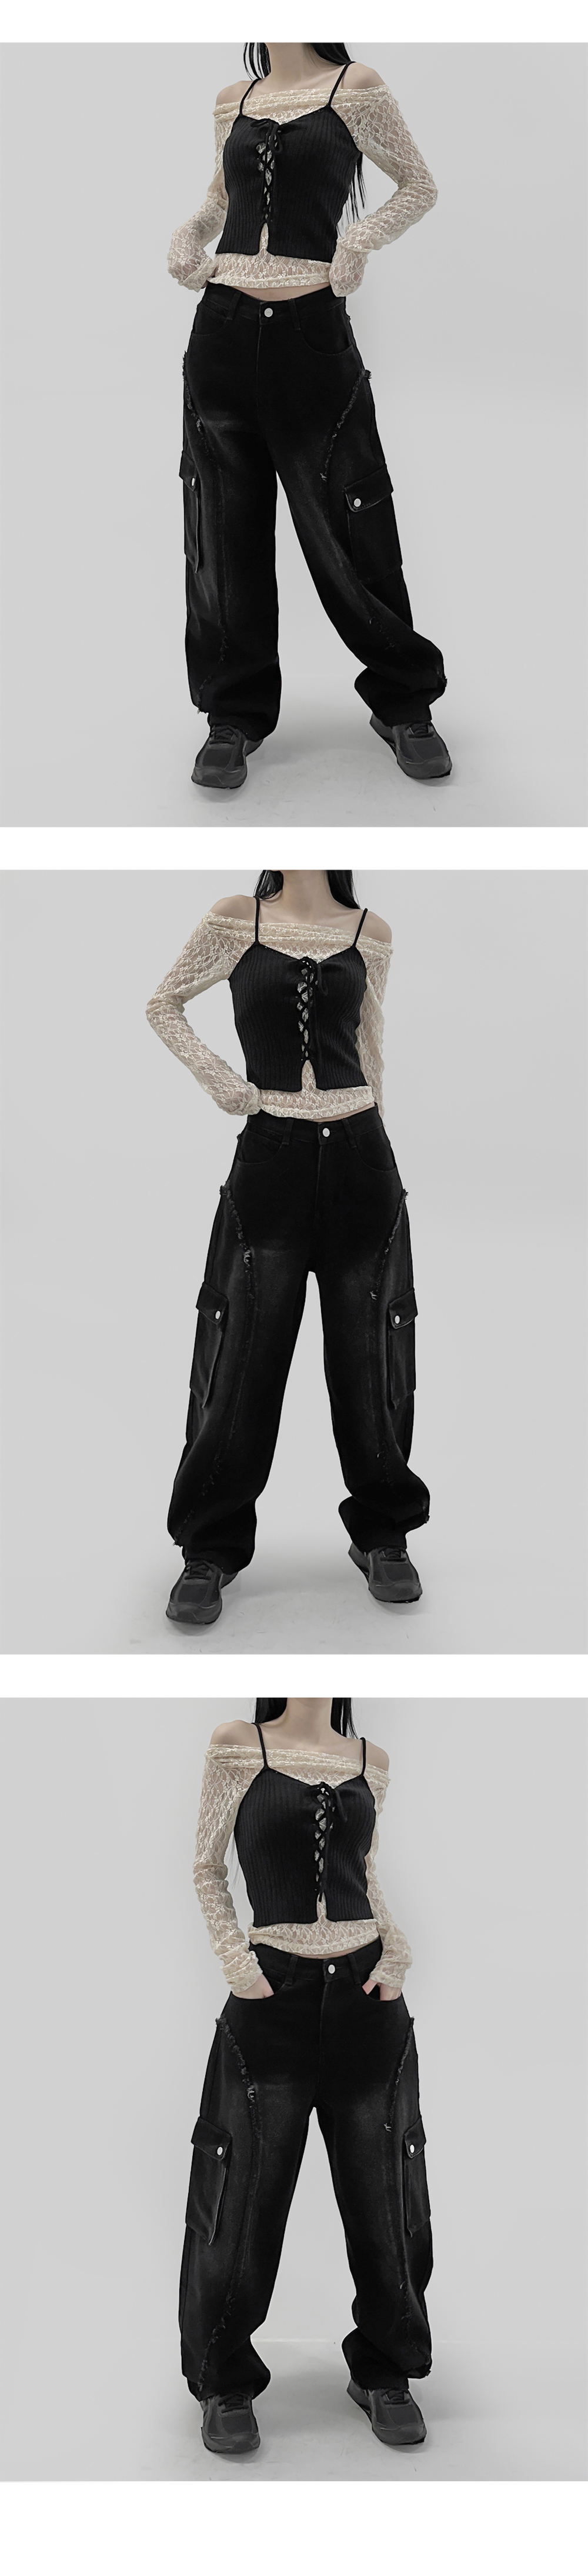 suspenders skirt/pants charcoal color image-S1L4